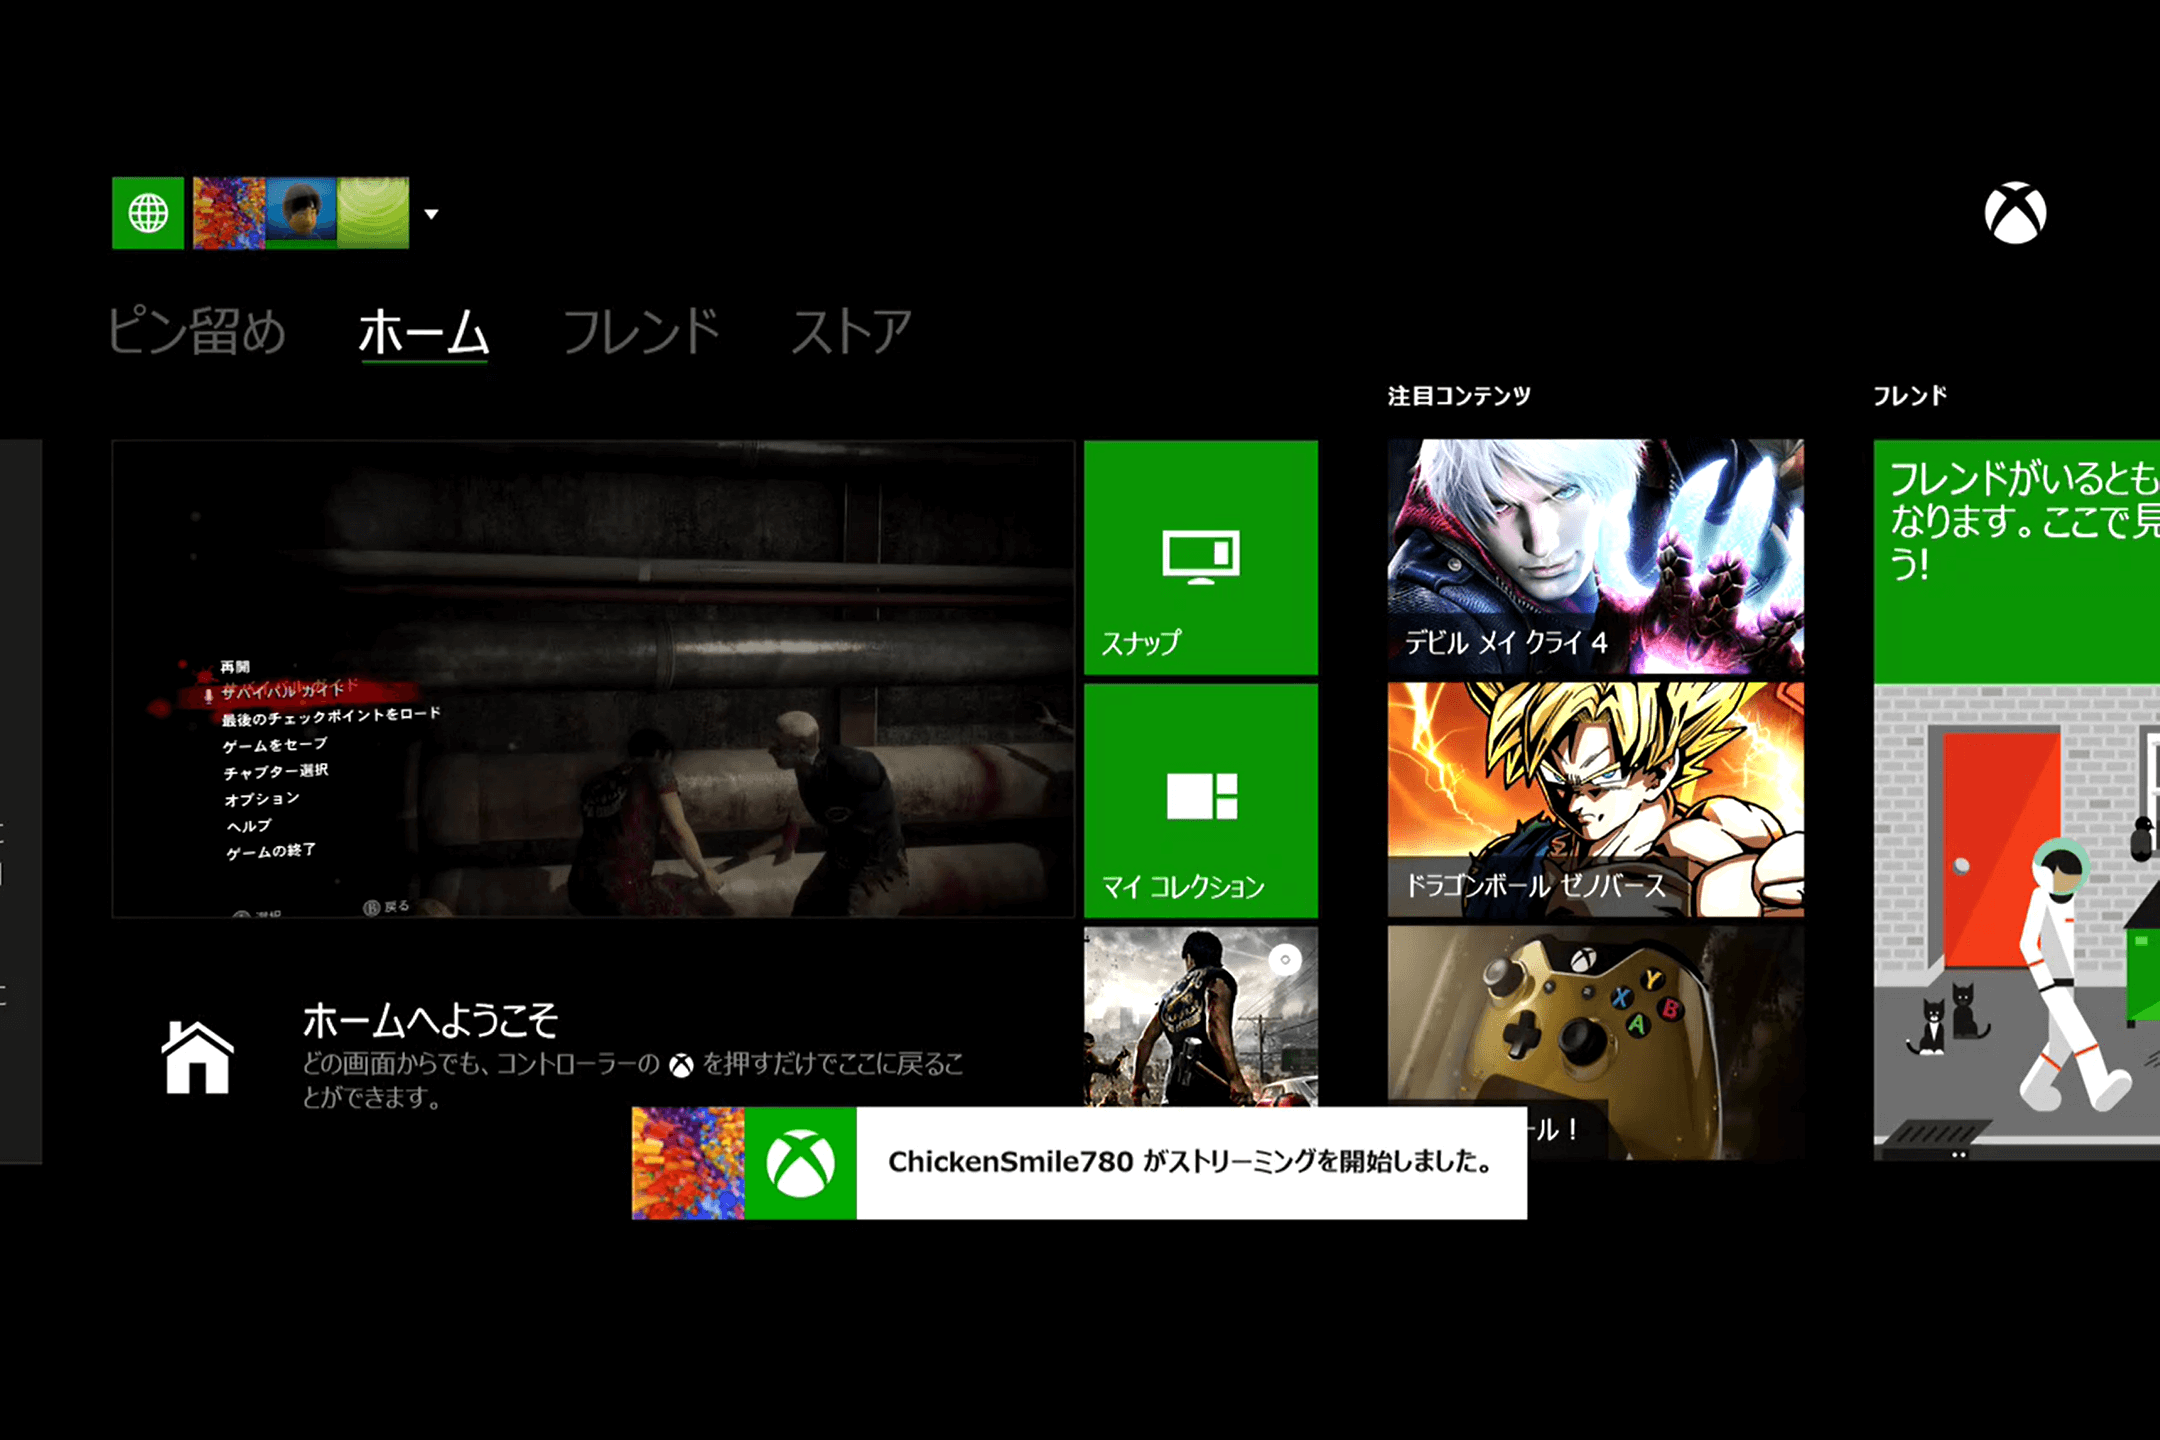 Xbox Oneの画面が表示される